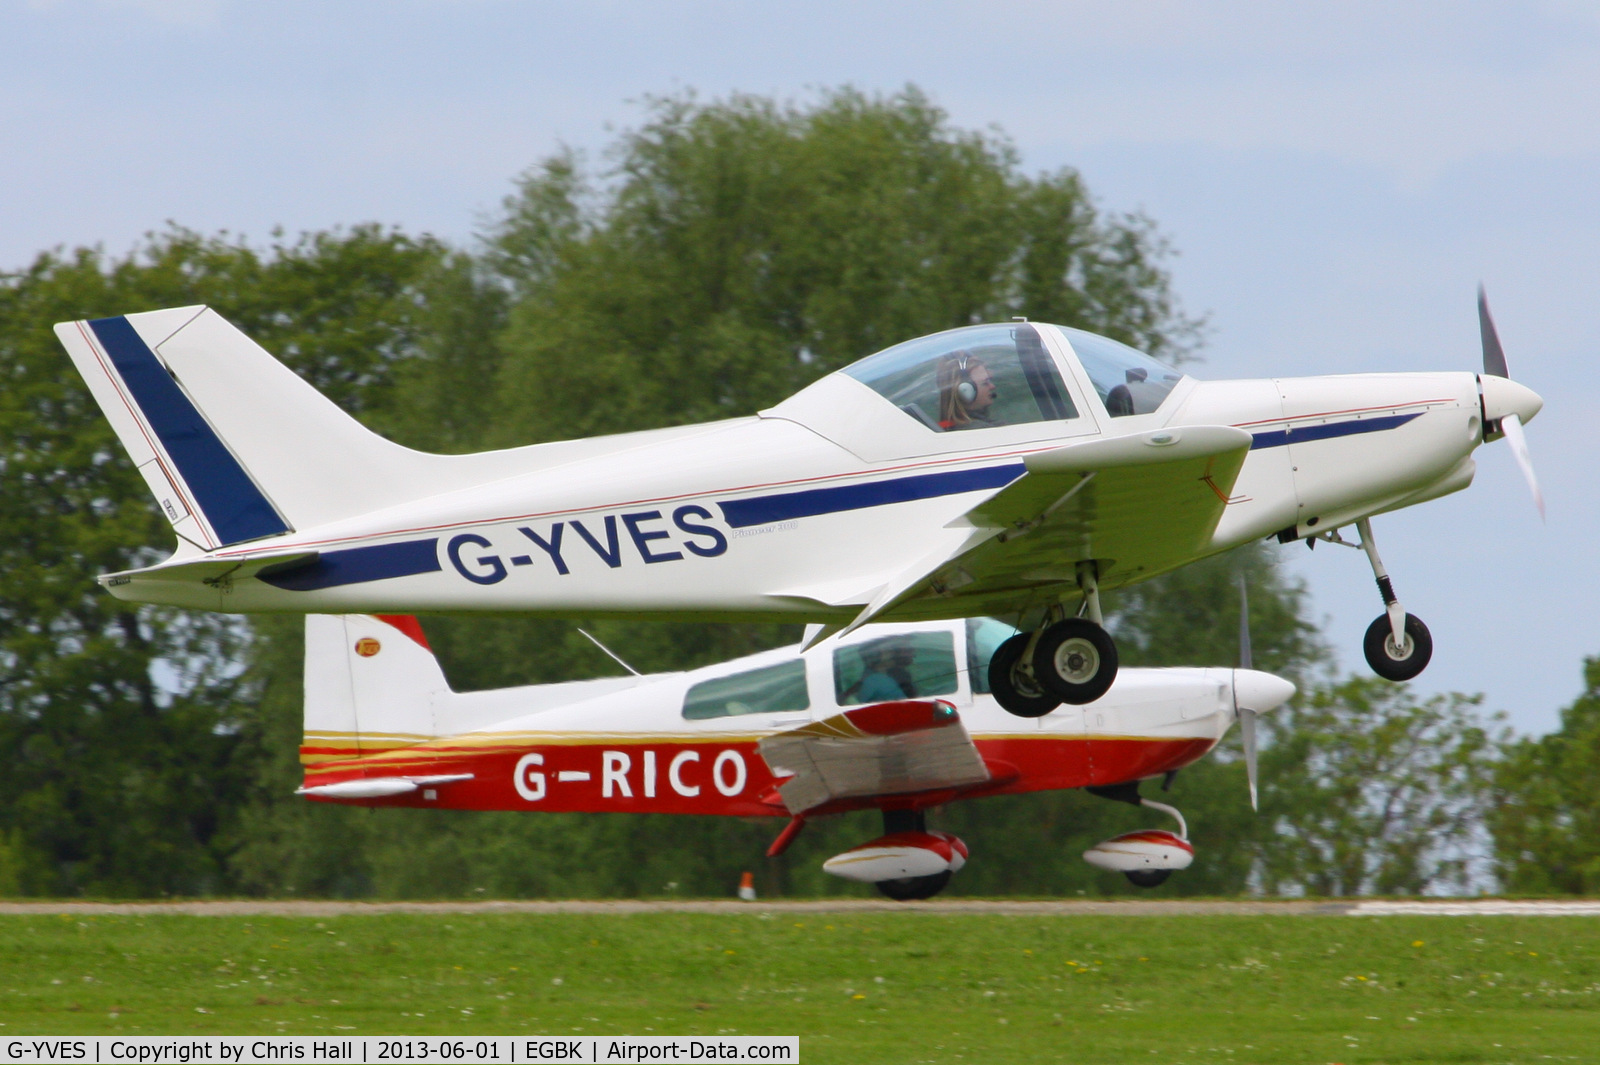 G-YVES, 2005 Alpi Aviation Pioneer 300 C/N PFA 330-14290, G-YVES landing on 03R with G-RICO landing on 03L